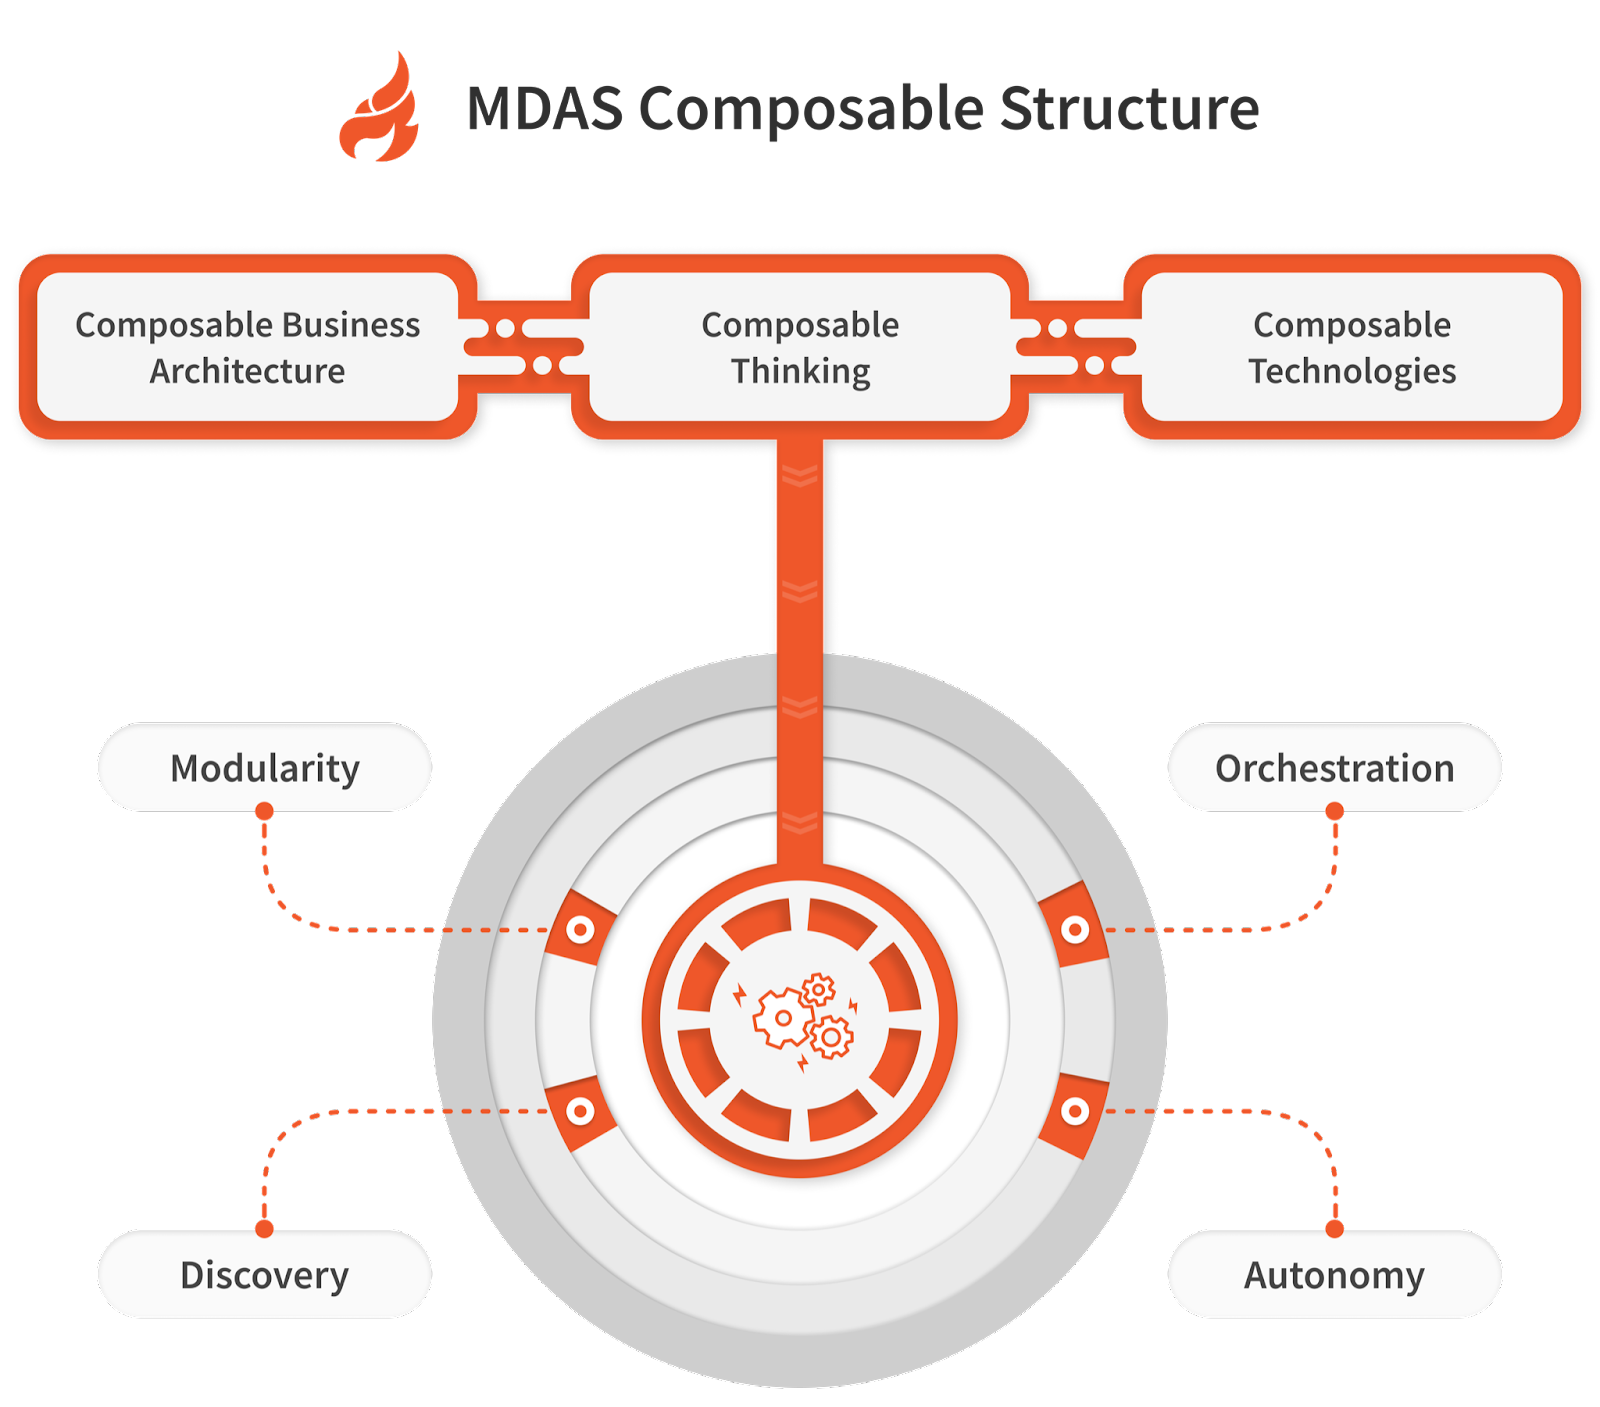 MDAS Composable Structure